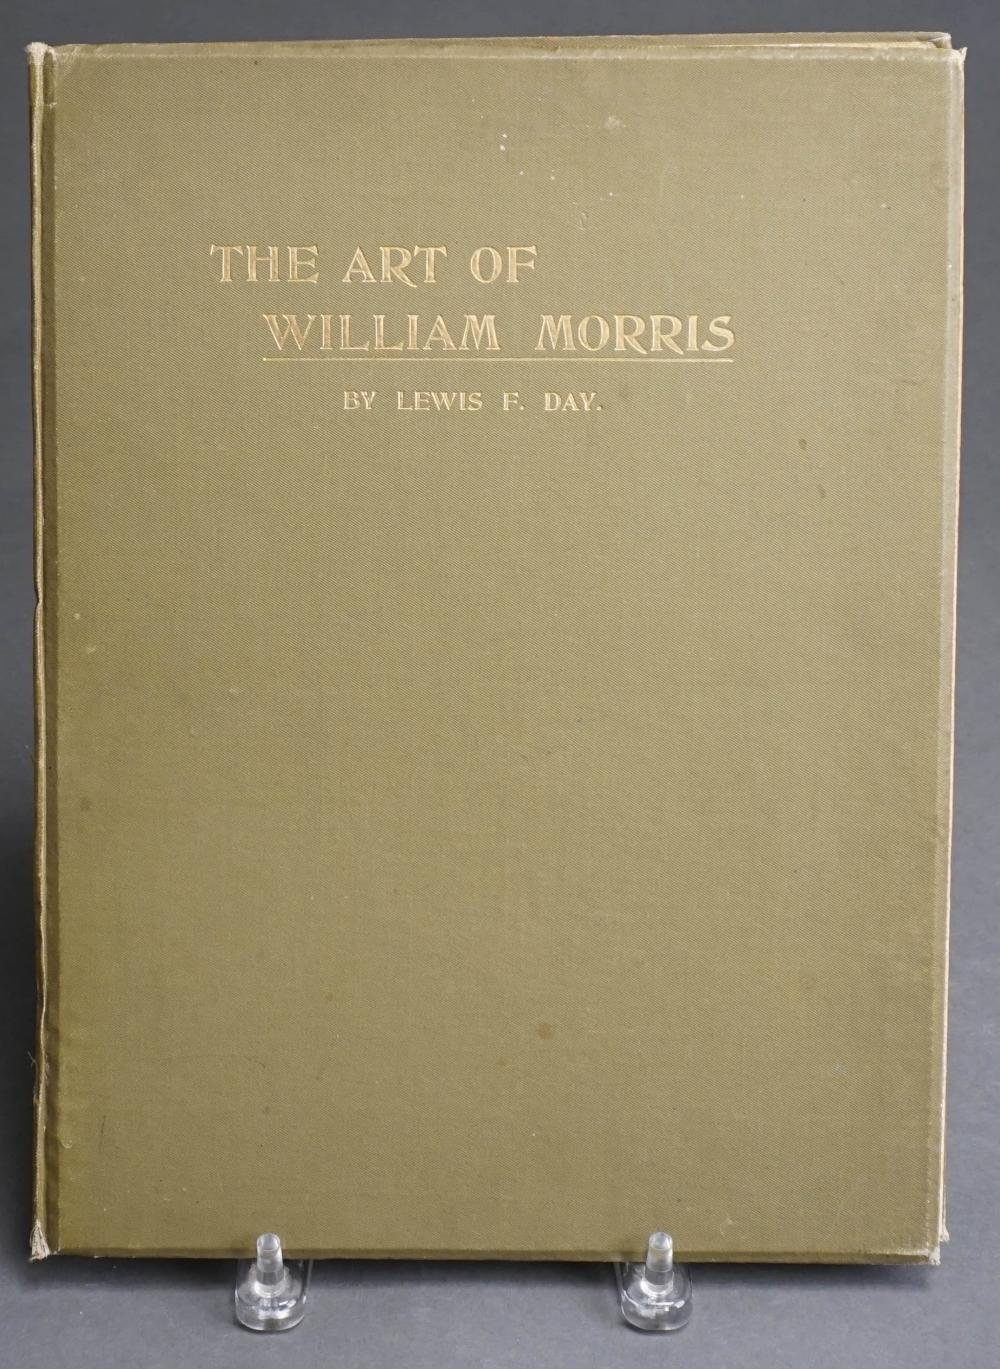 LEWIS F. DAY, THE ART OF WILLIAM MORRIS,